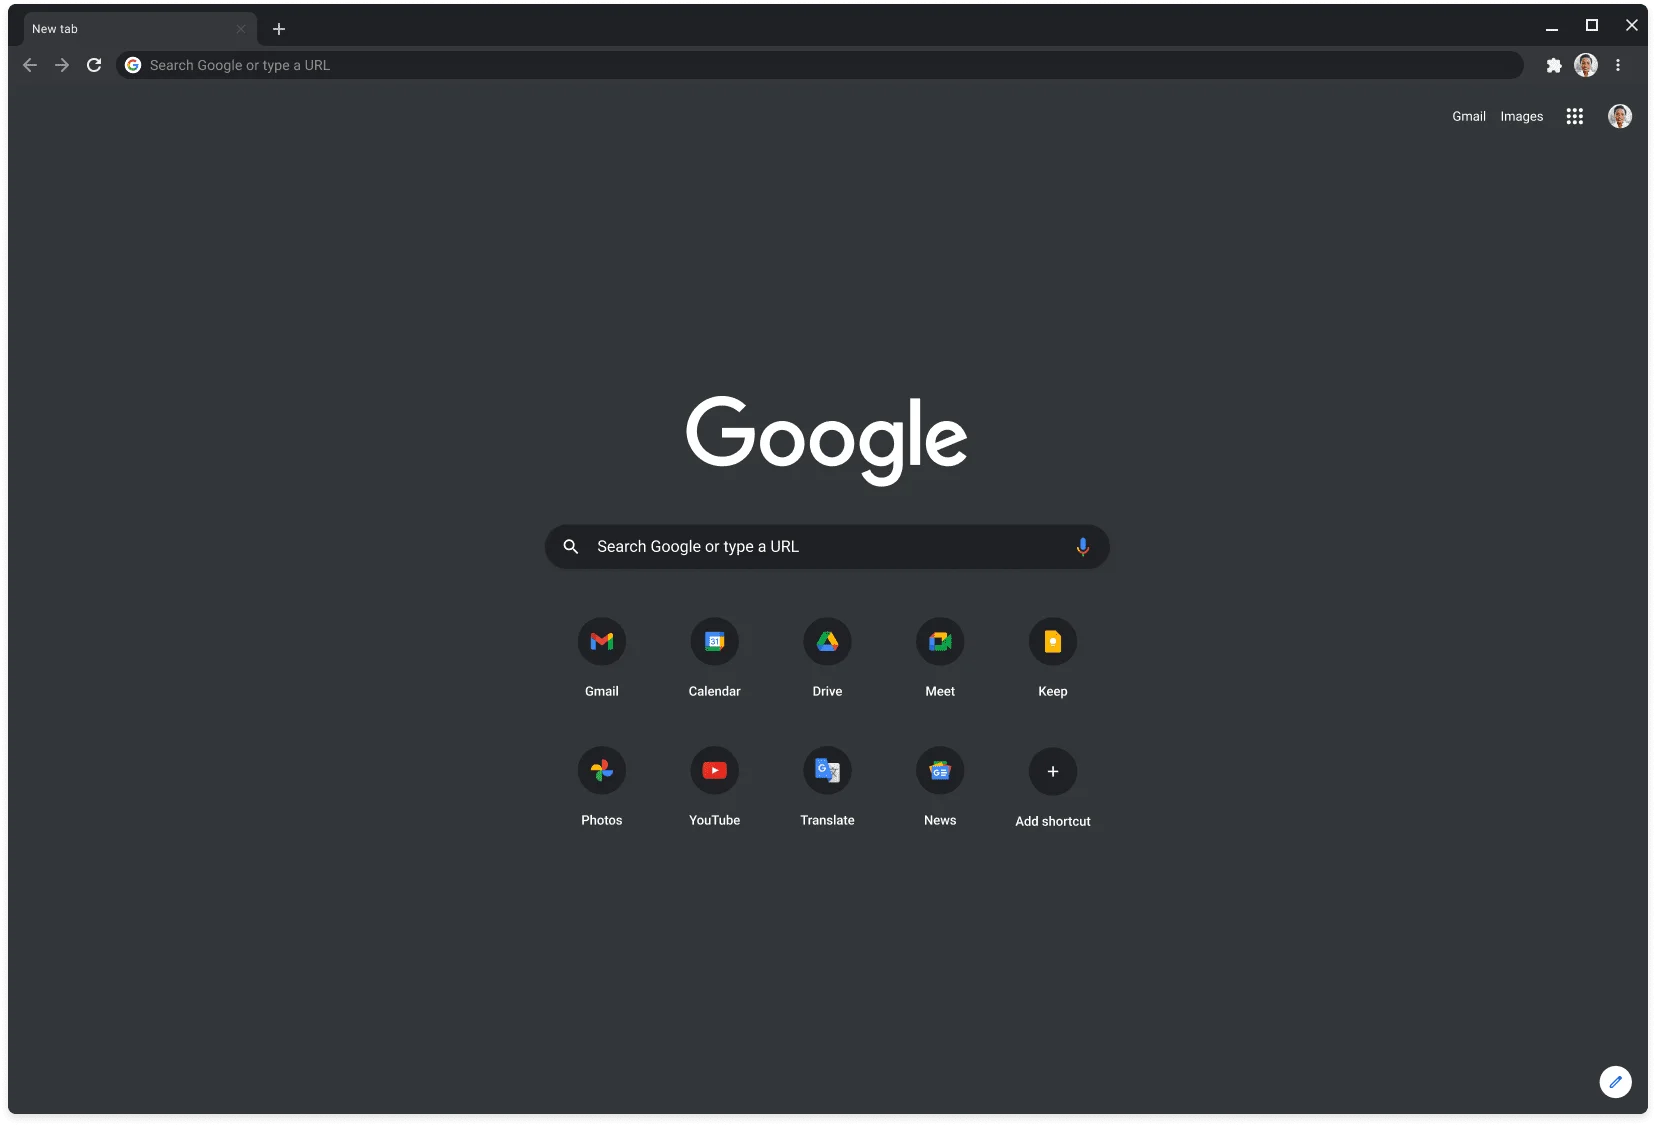 Chrome browser window in dark mode, displaying Google.com.